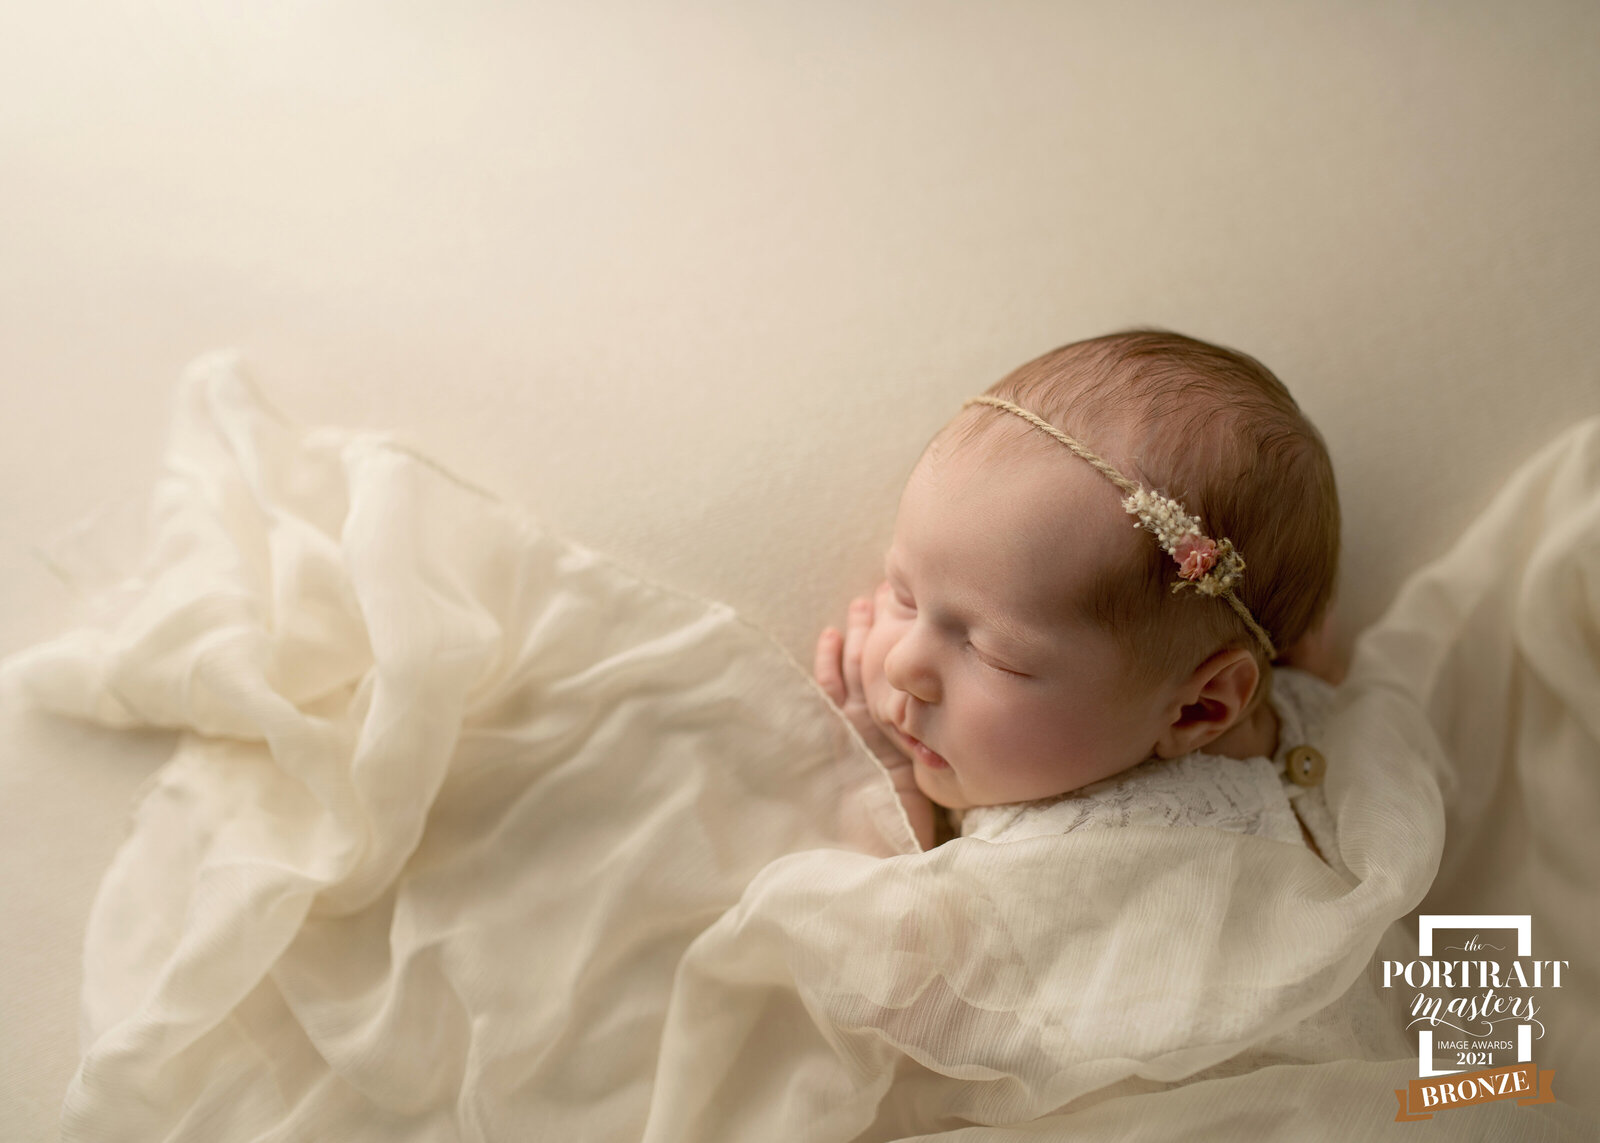 Portrait Masters Bronze newborn portrait with cream and floral accents